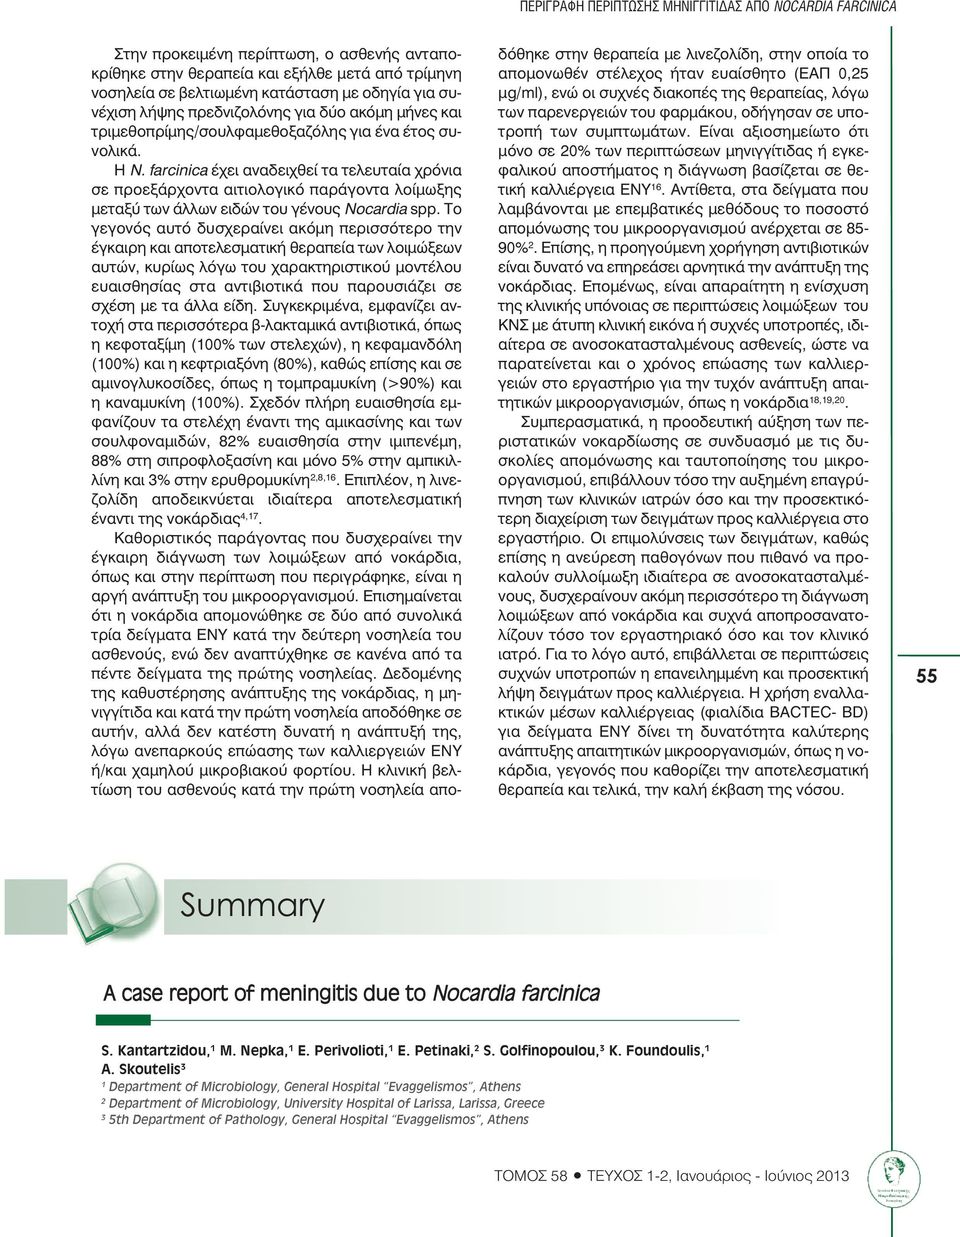 farcinica έχει αναδειχθεί τα τελευταία χρόνια σε προεξάρχοντα αιτιολογικό παράγοντα λοίµωξης µεταξύ των άλλων ειδών του γένους Nocardia spp.